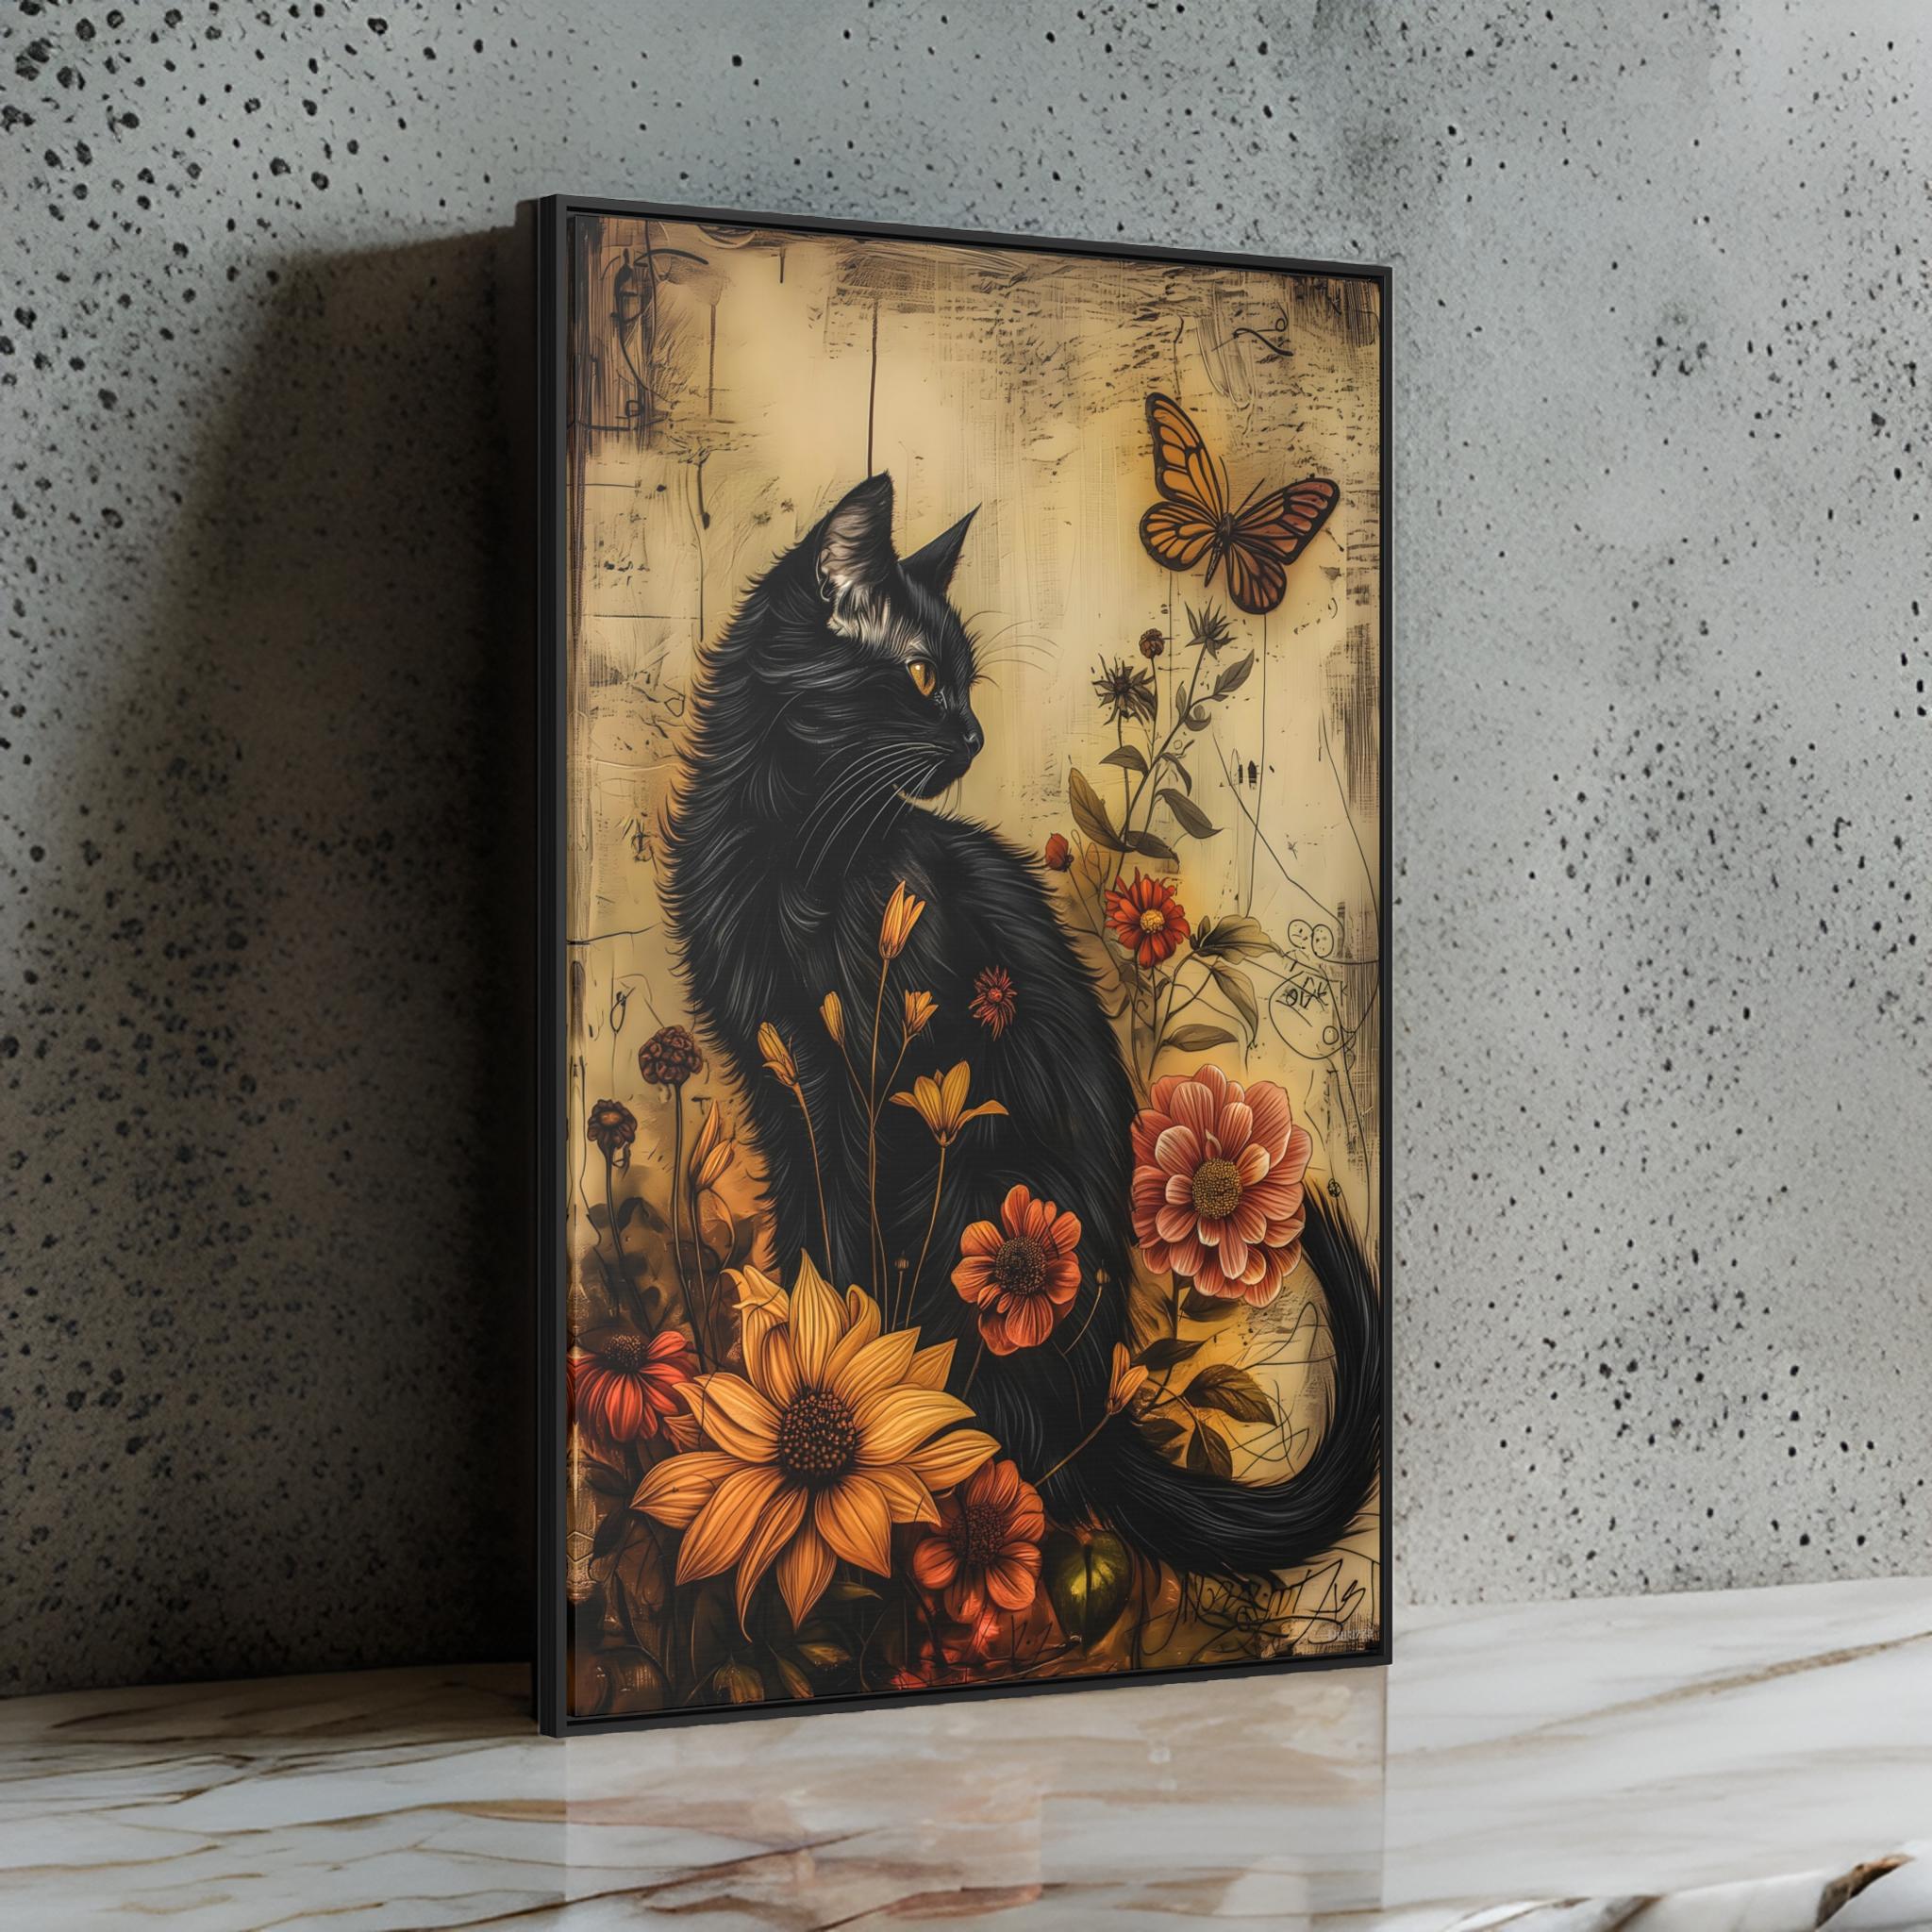 A Feline's Flourish Painting: Black Cat Wall Art